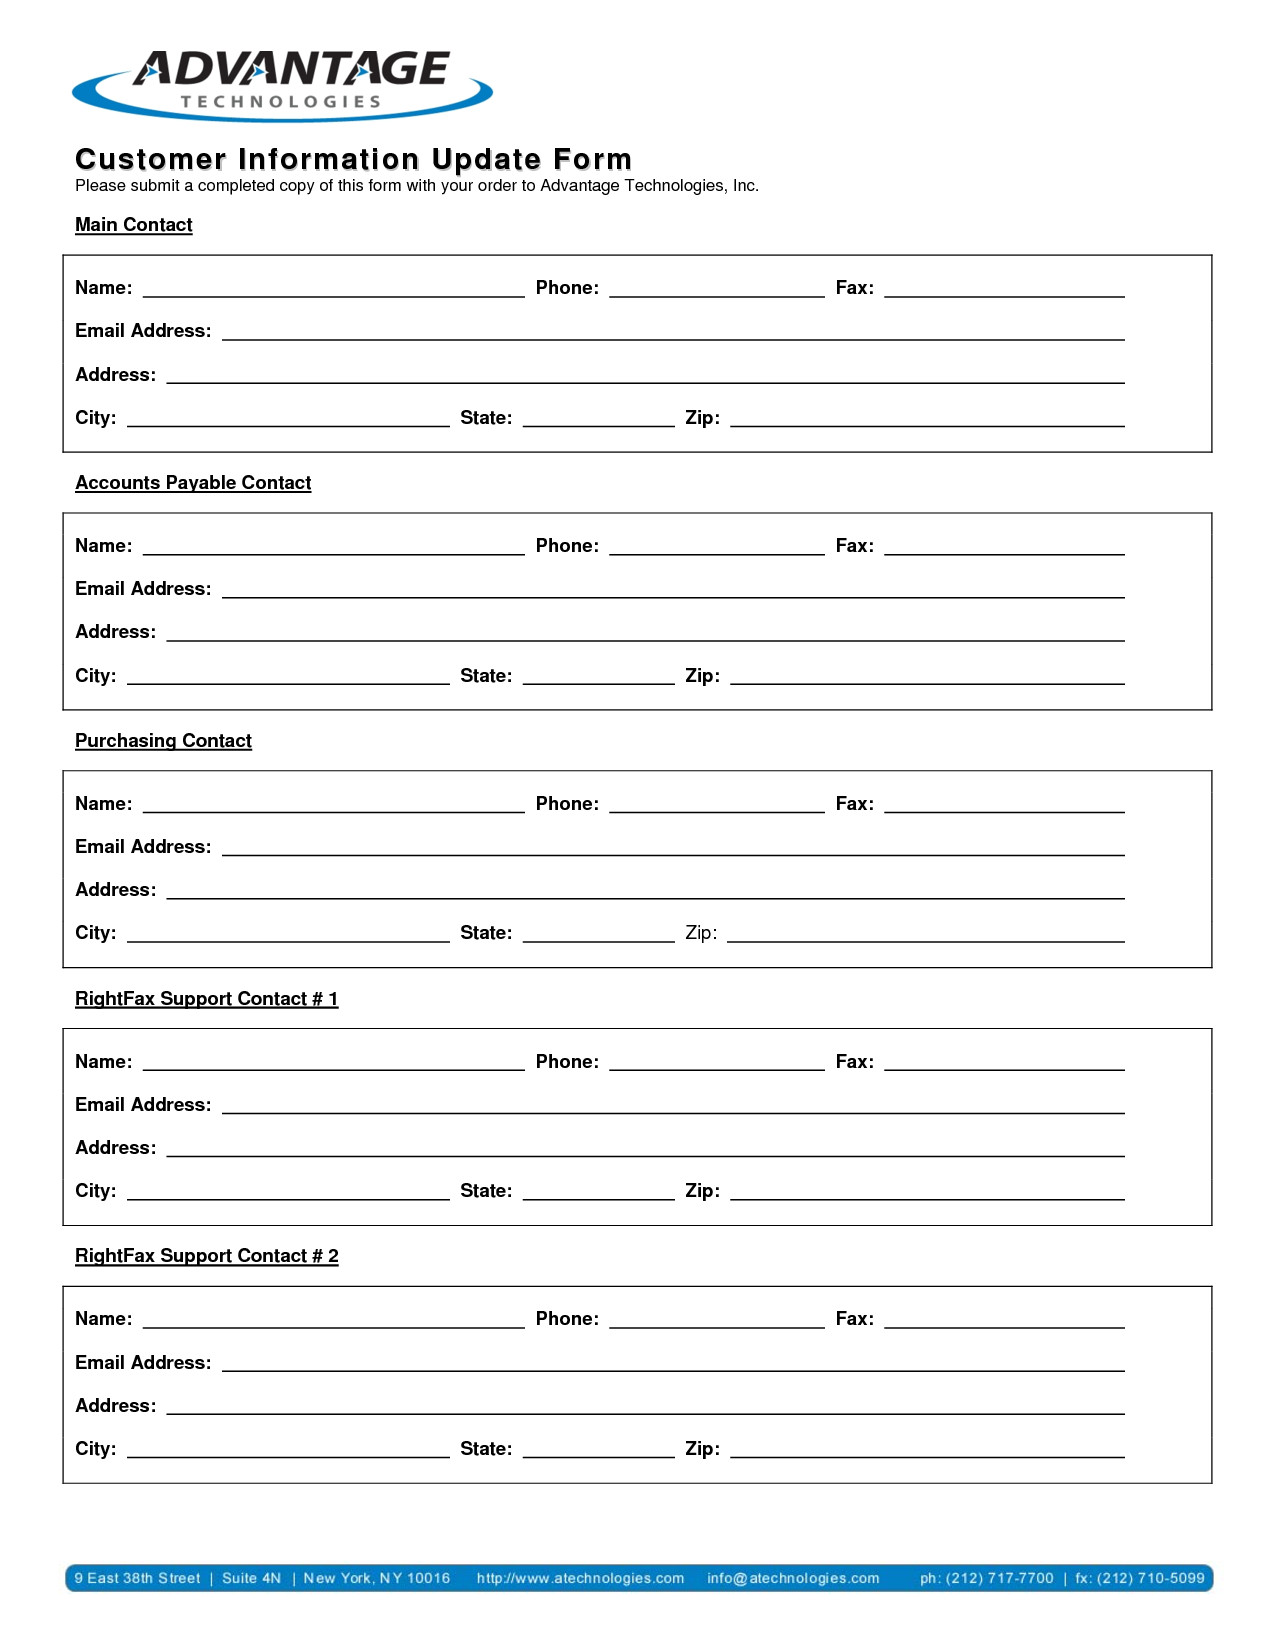 Customer Information form Template Customer Information Sheet Template